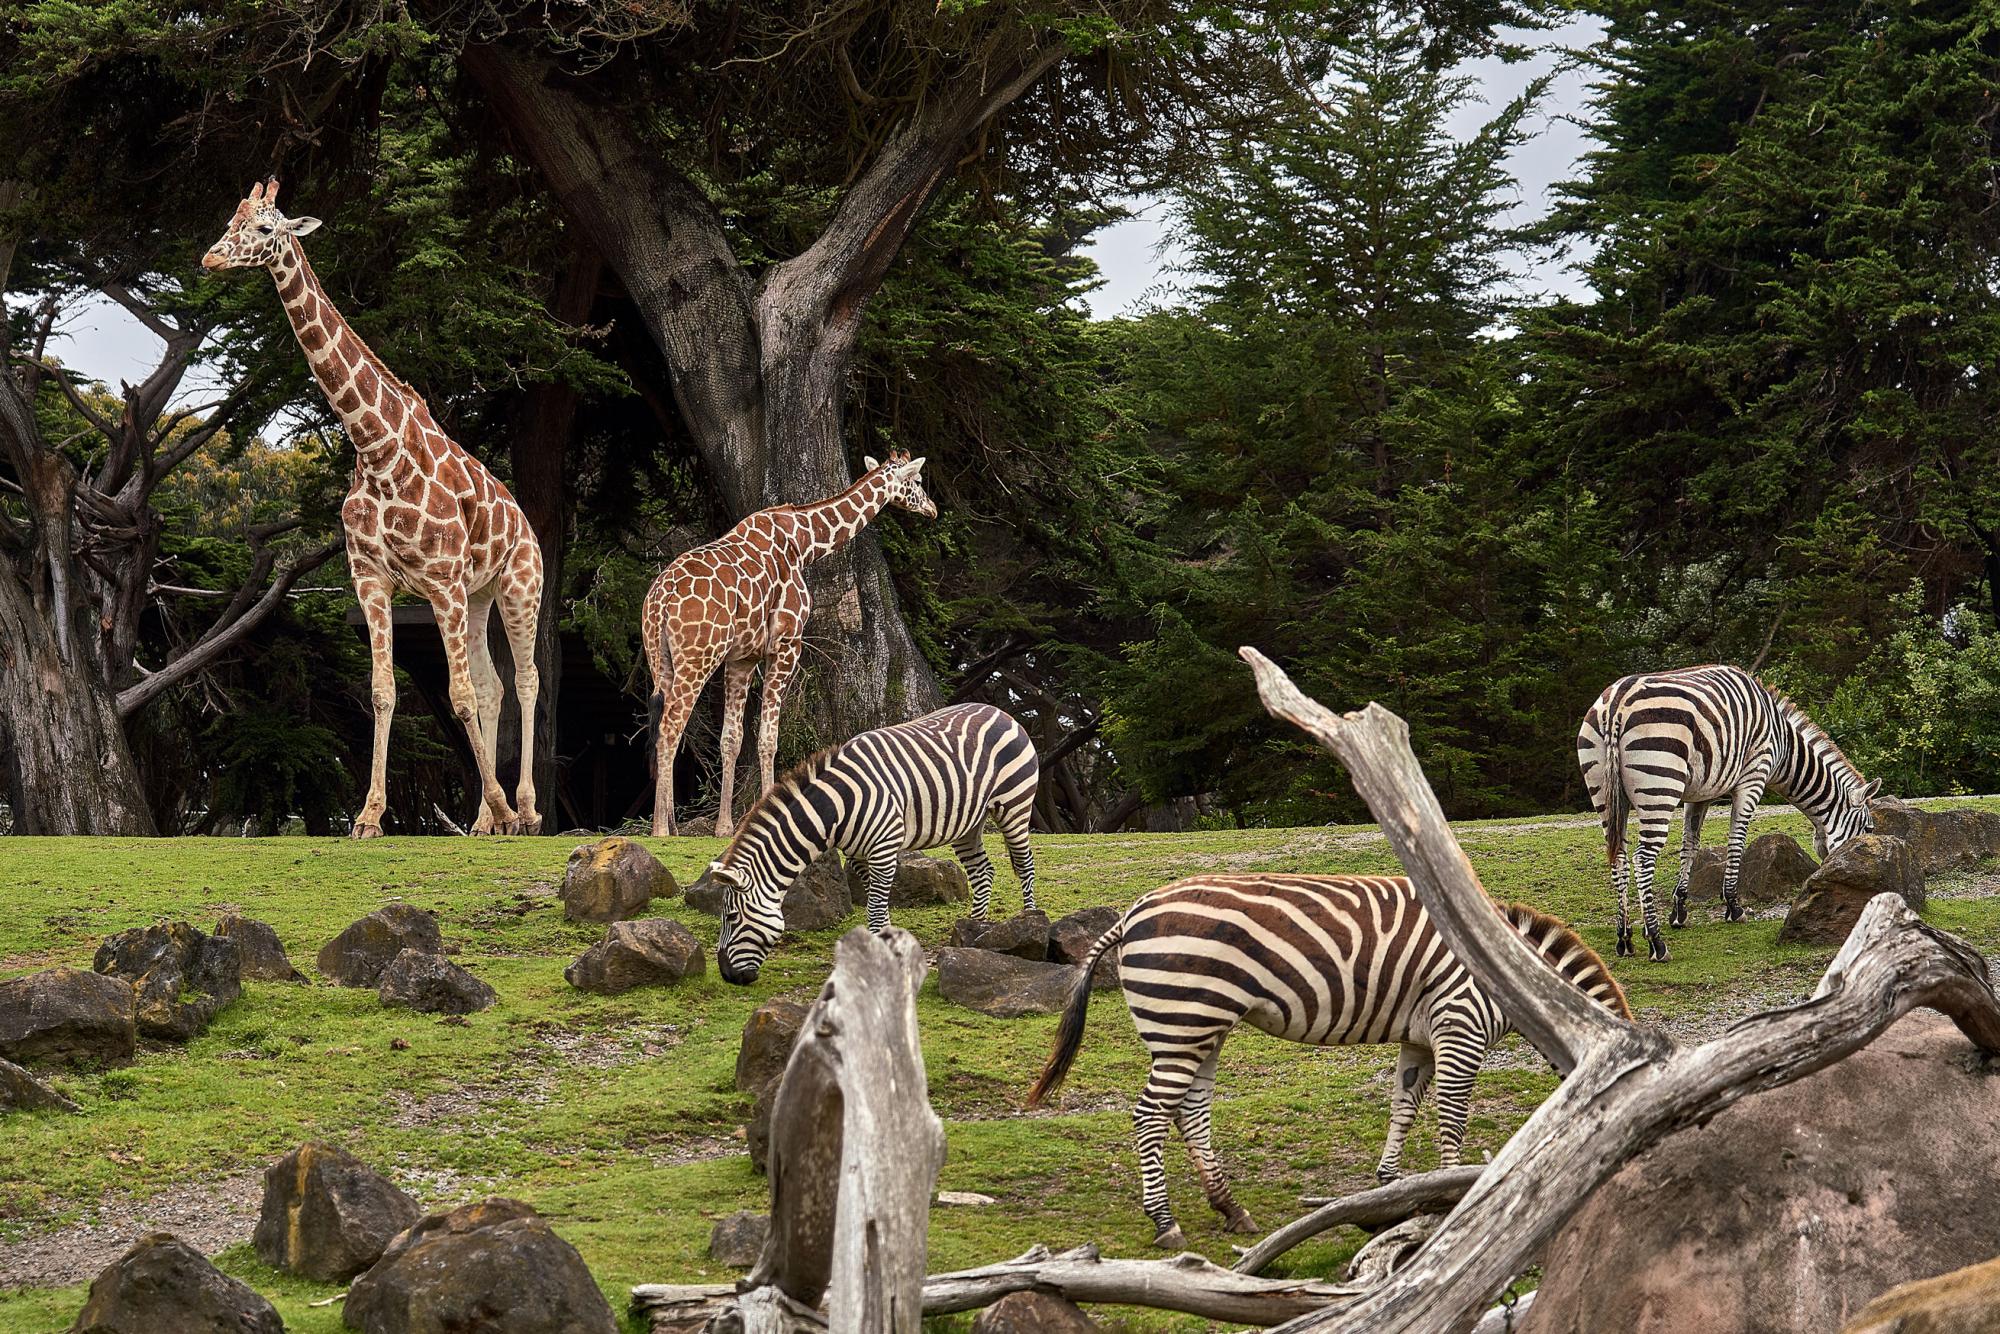 Giraffes in the wild